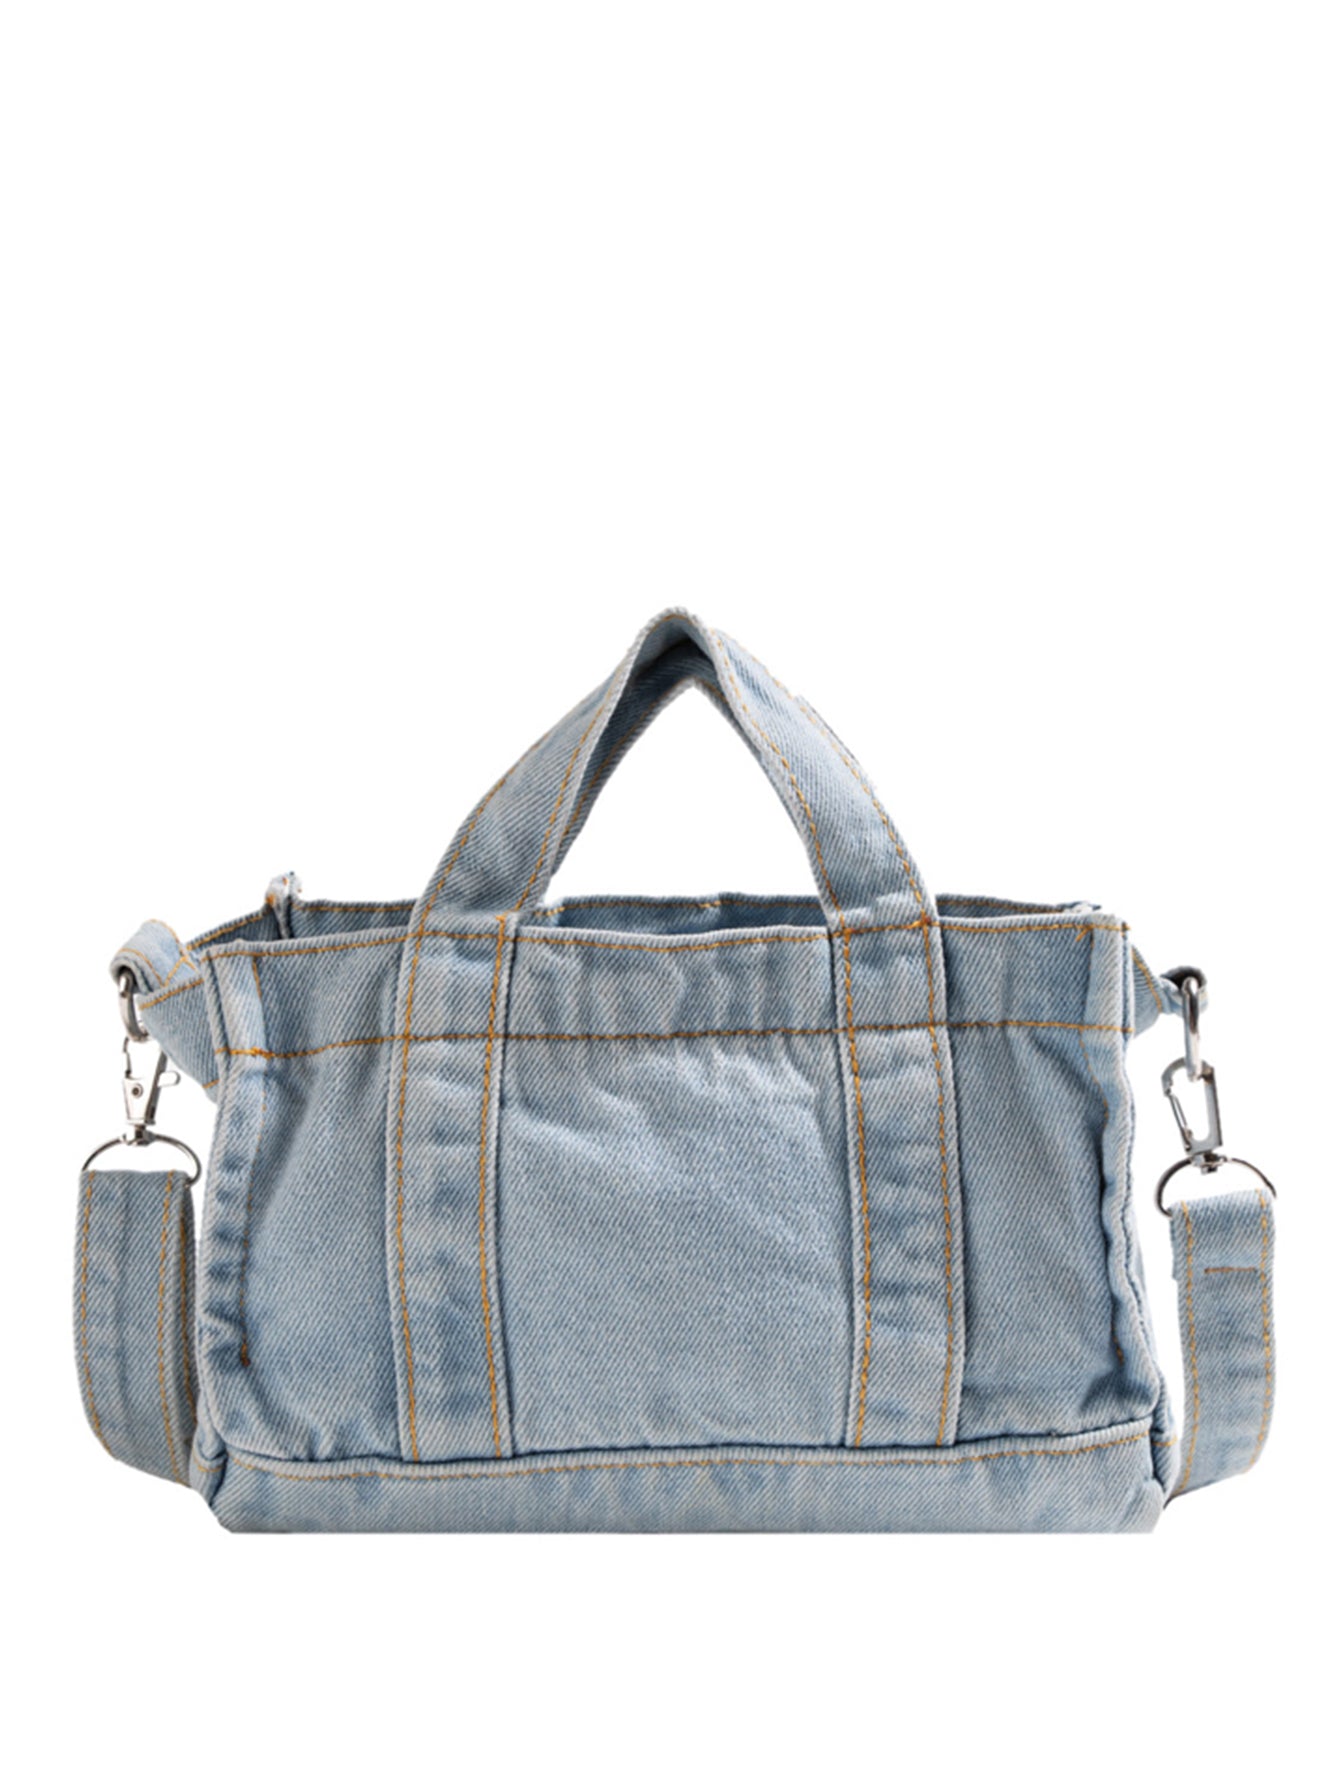 Light Slate Gray Denim Shoulder Bag Sentient Beauty Fashions Apparel & Accessories